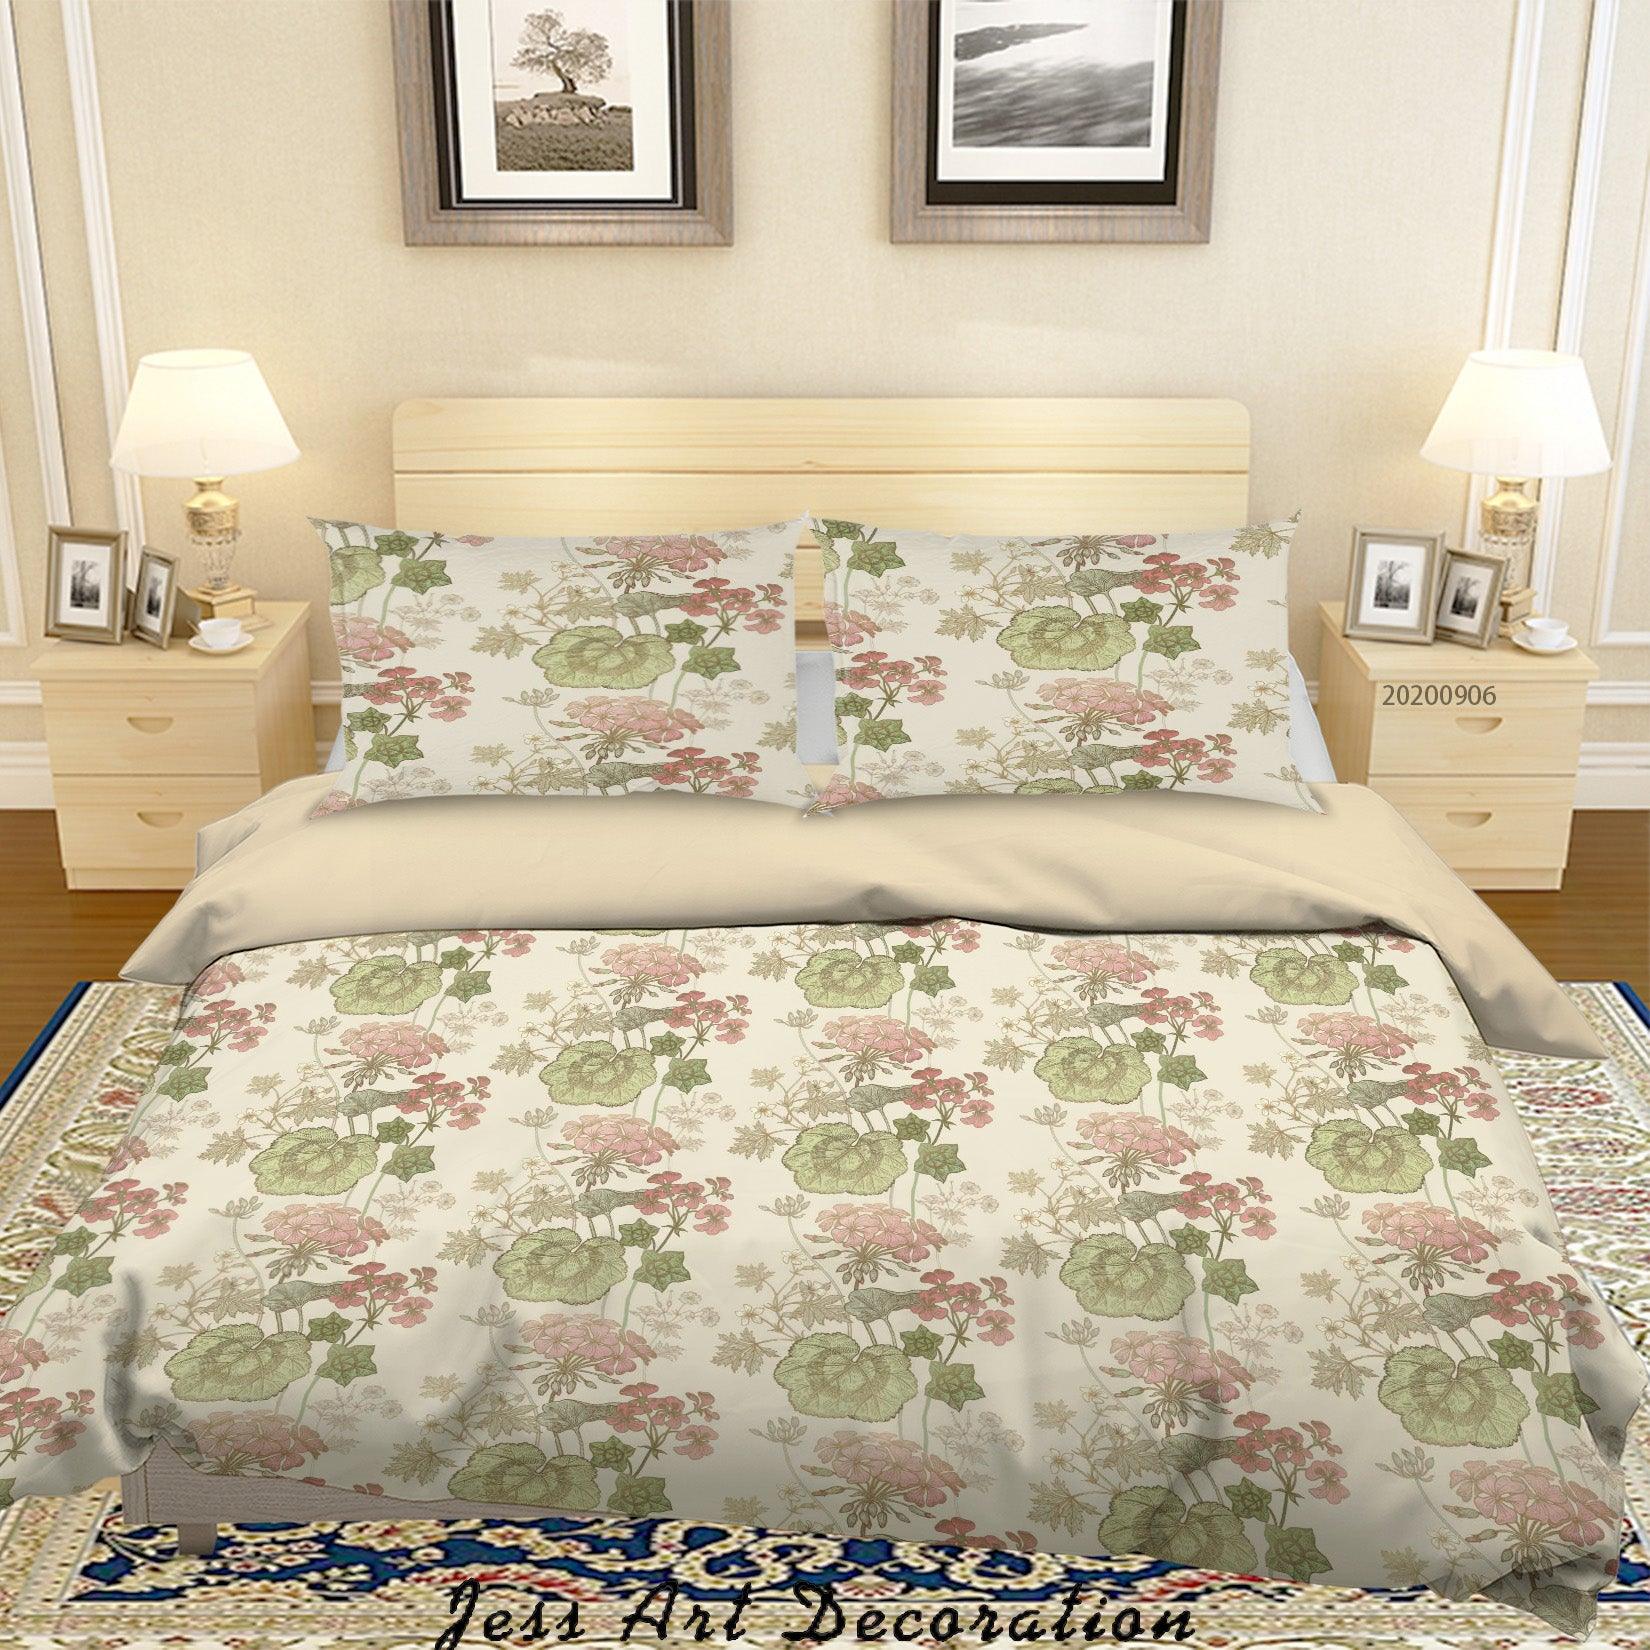 3D Vintage Leaves White Floral Pattern Quilt Cover Set Bedding Set Duvet Cover Pillowcases WJ 3651- Jess Art Decoration